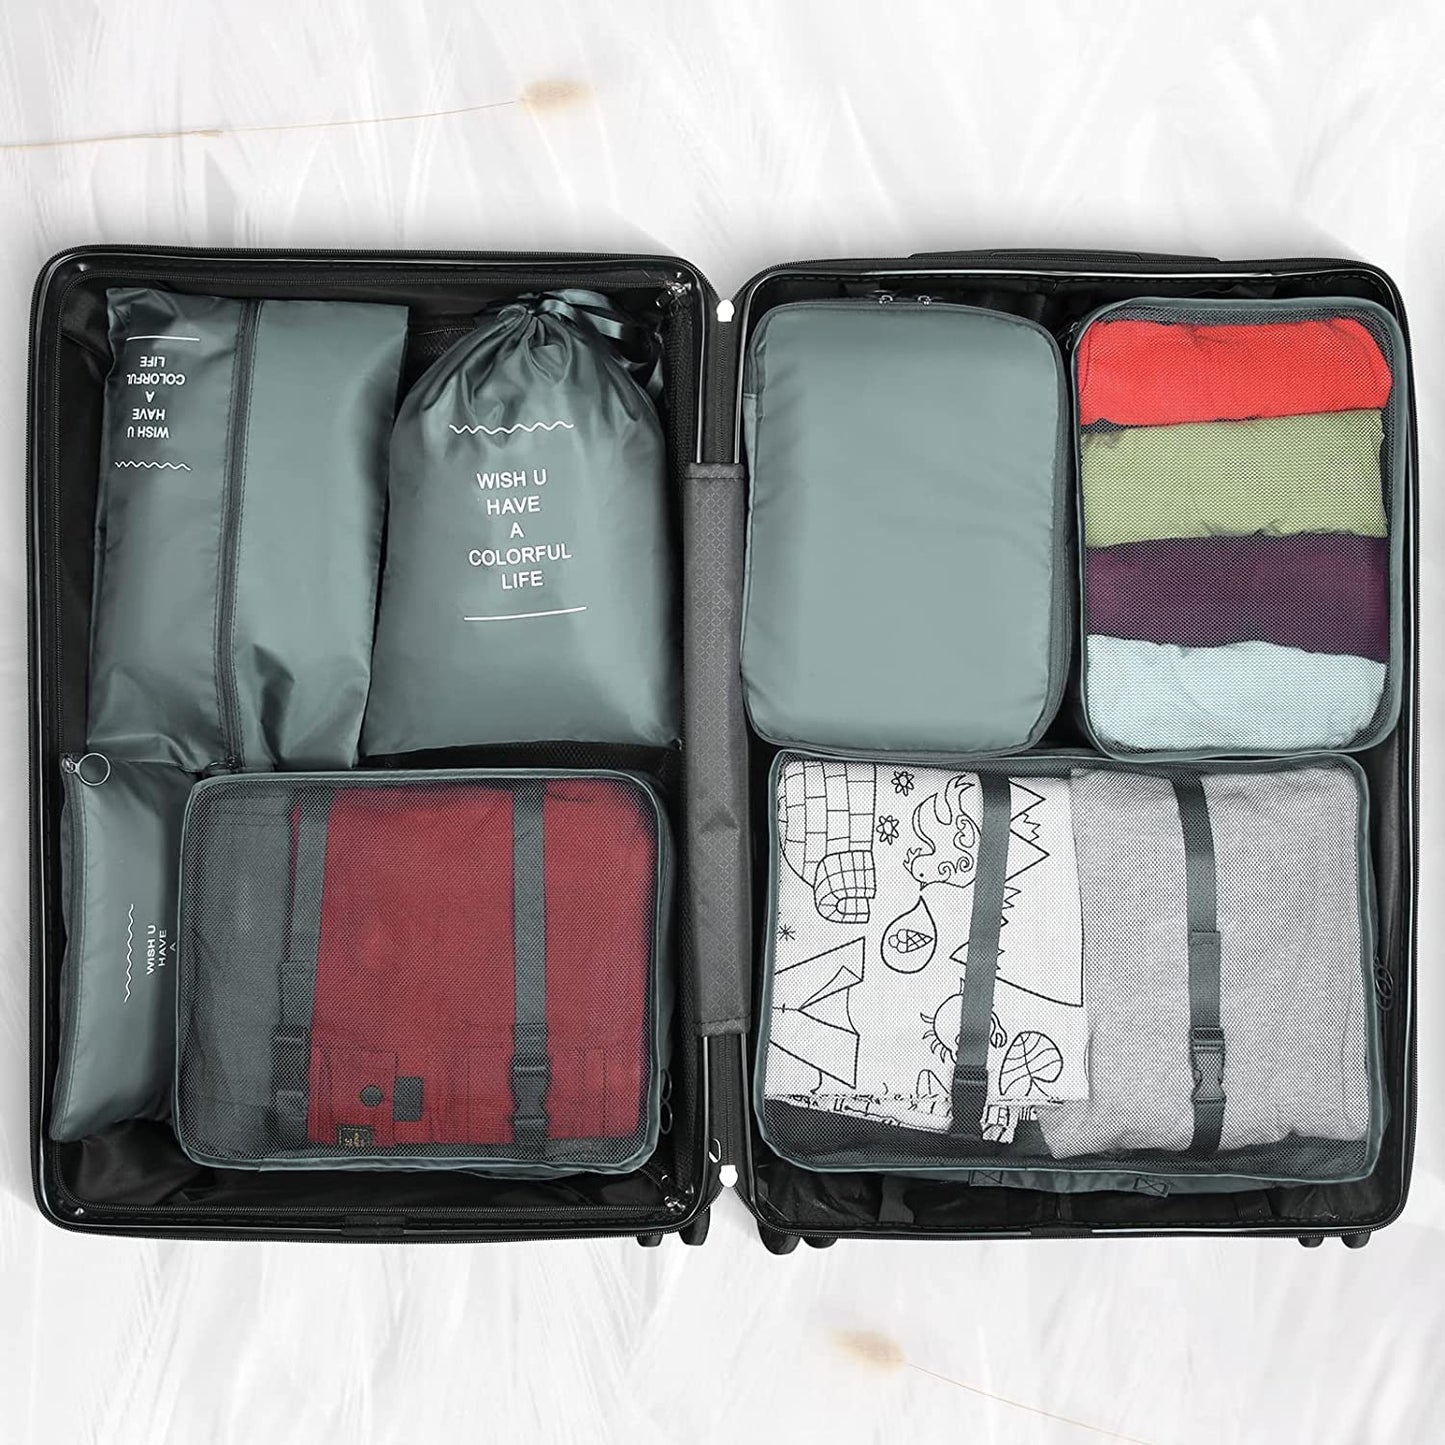 SAVE 7in1 Travel Organizer Bag Luggage Organizer Toiletries Bag